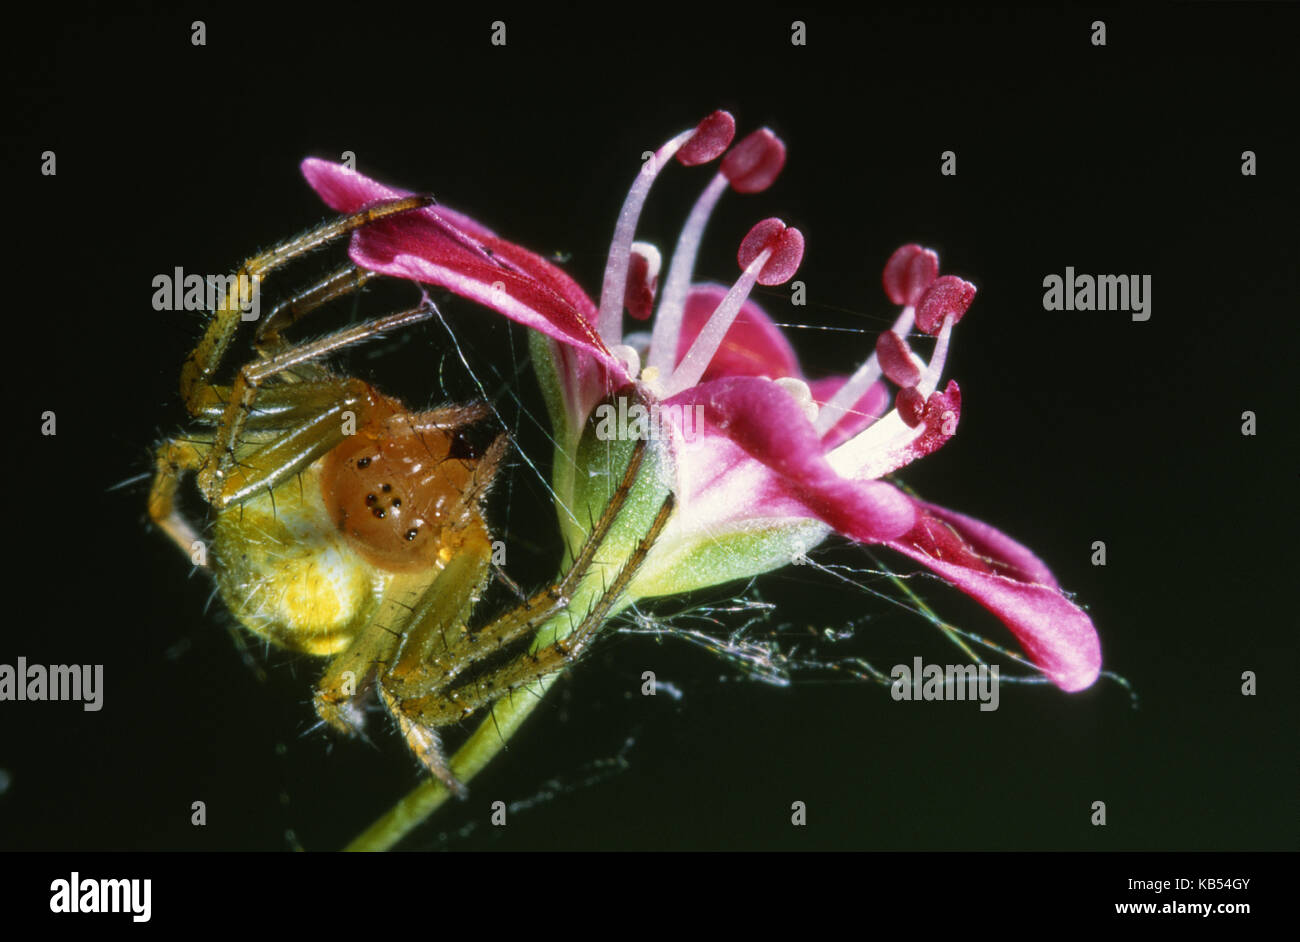 Cucumber Spider (Araniella cucurbitina) on flower, waiting patiently for prey, Belgium Stock Photo